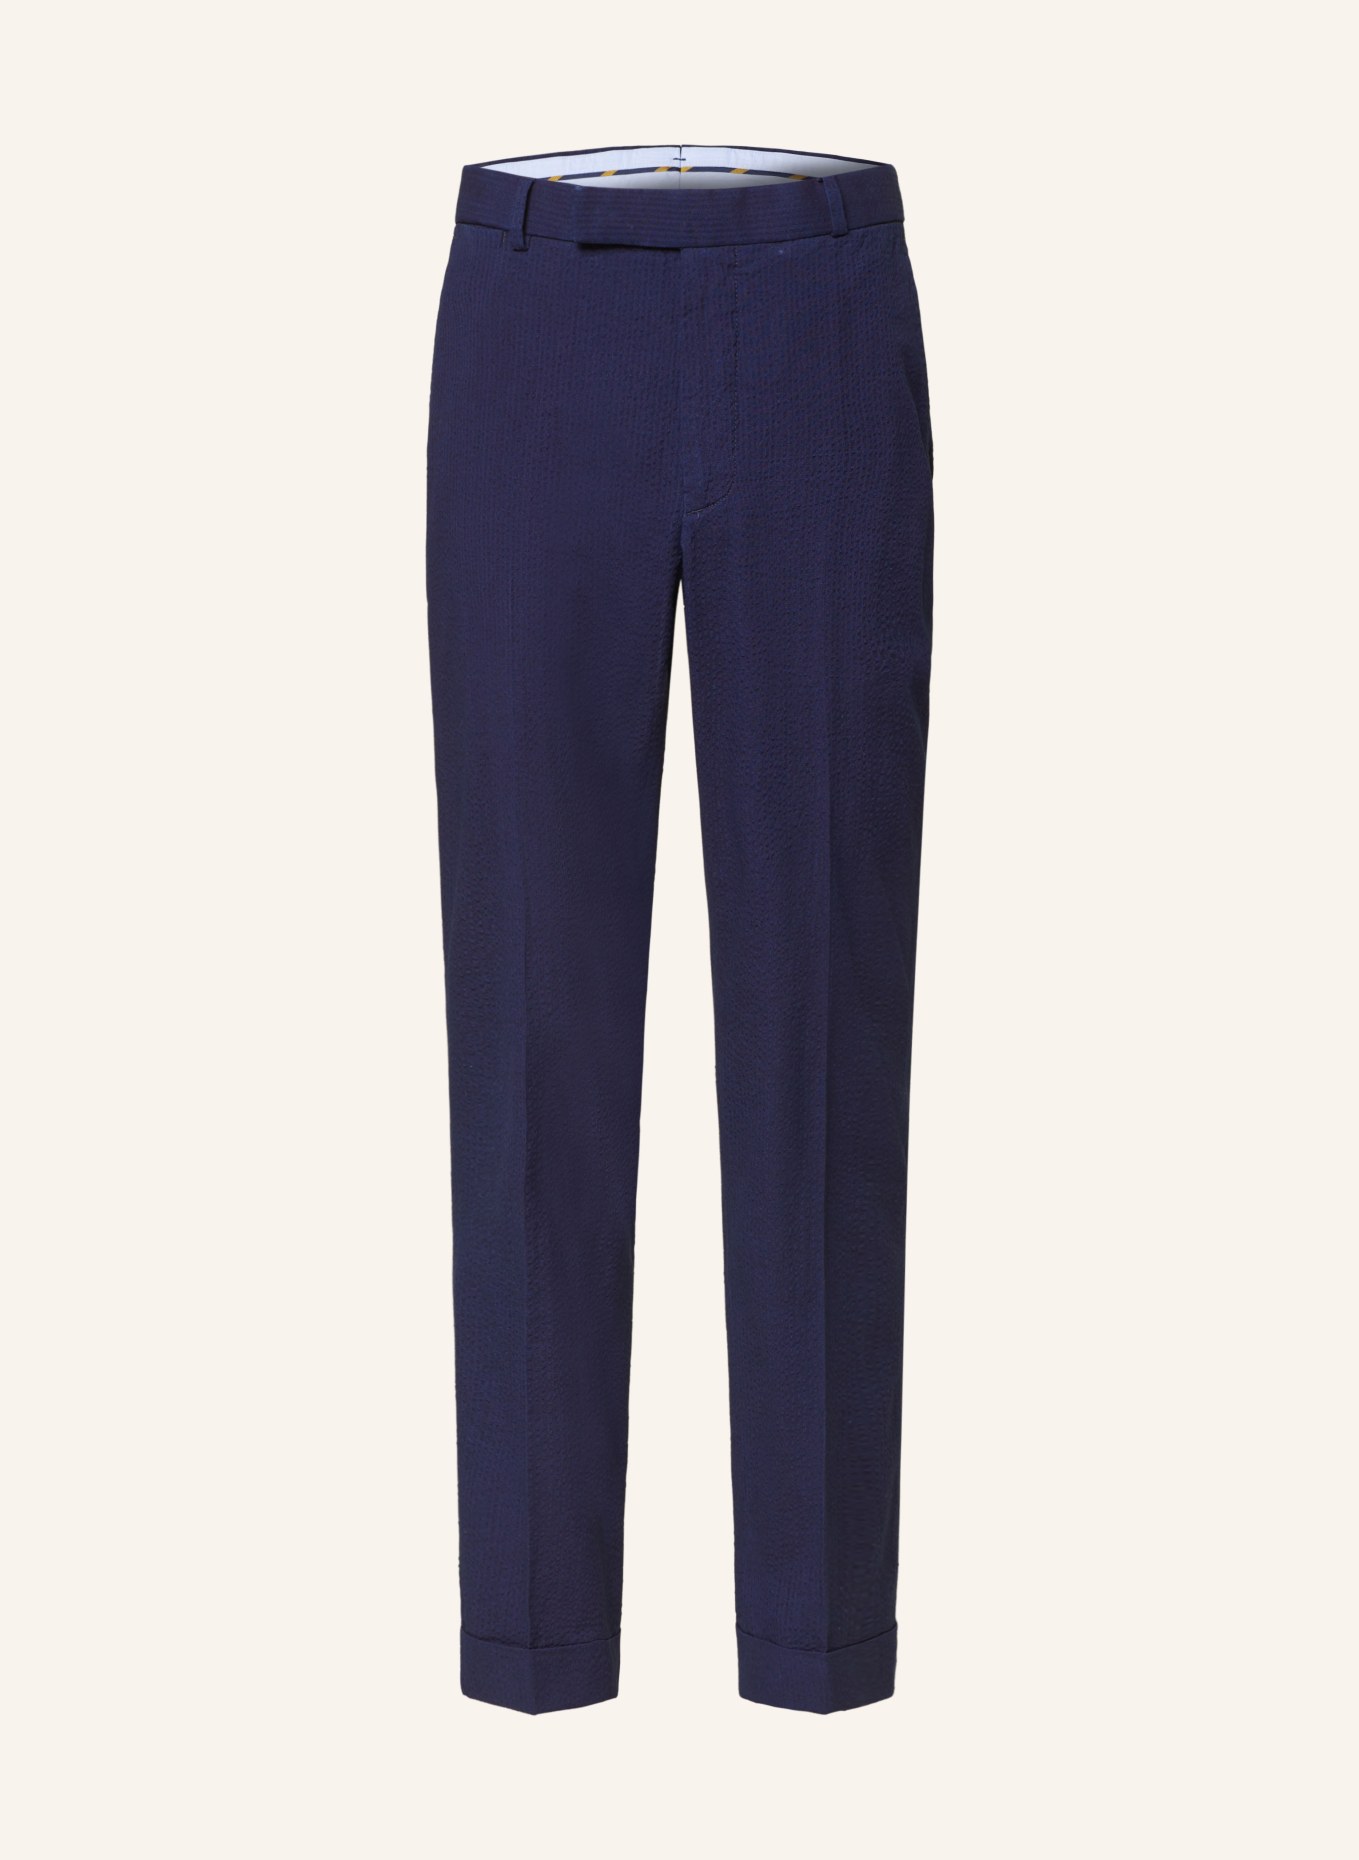 POLO RALPH LAUREN Anzughose Regular Fit, Farbe: 001 BRIGHT BLUE/WHITE (Bild 1)